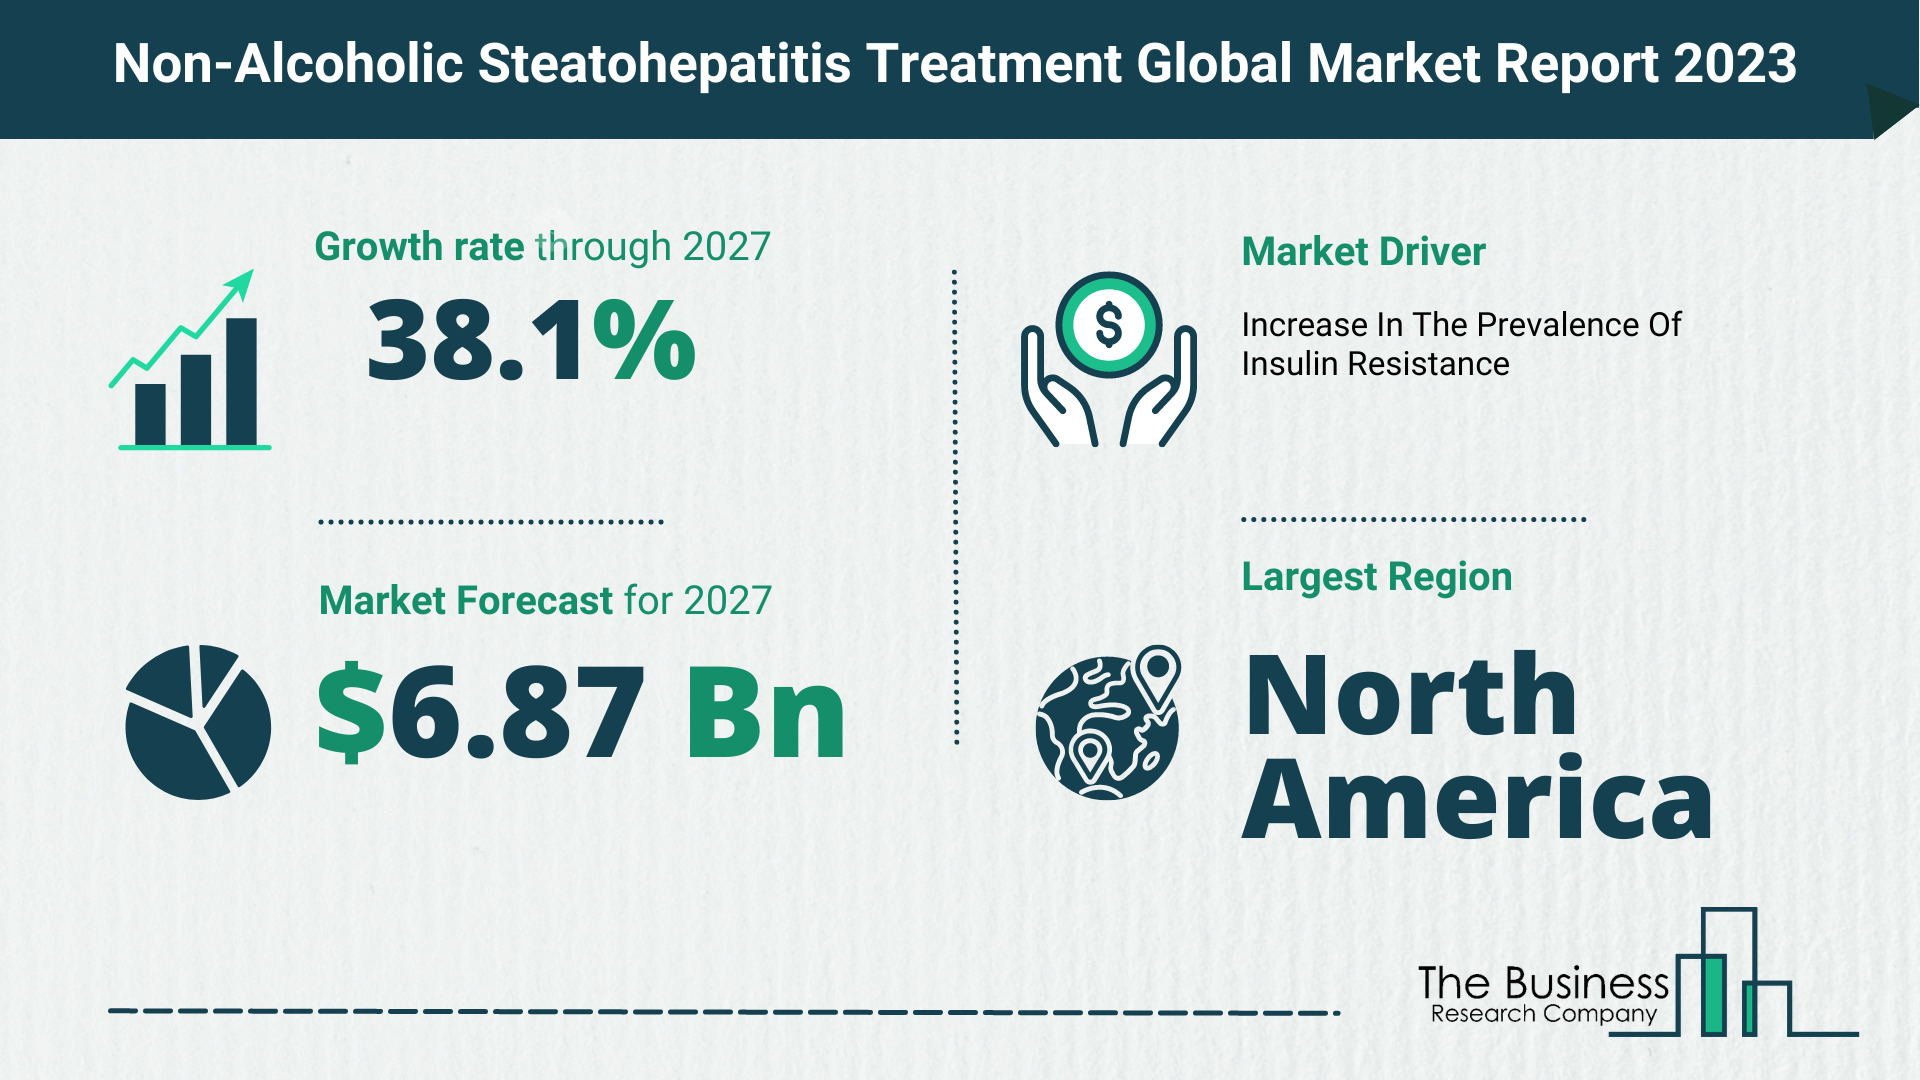 Global Non-Alcoholic Steatohepatitis Treatment Market Size